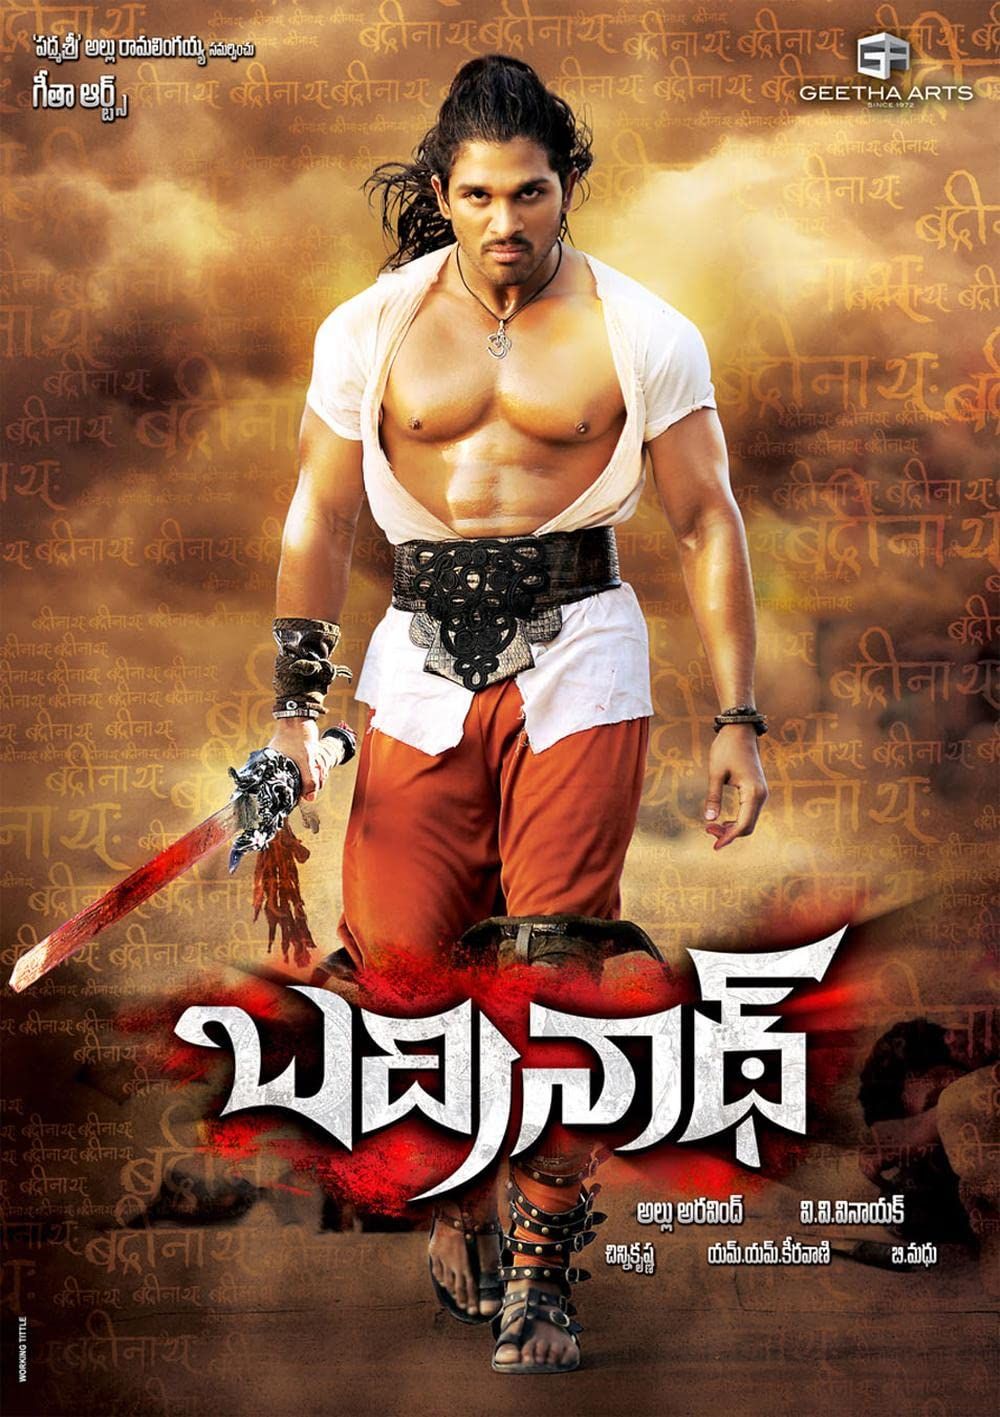 Badrinath (2011) Hindi Dubbed HDRip download full movie